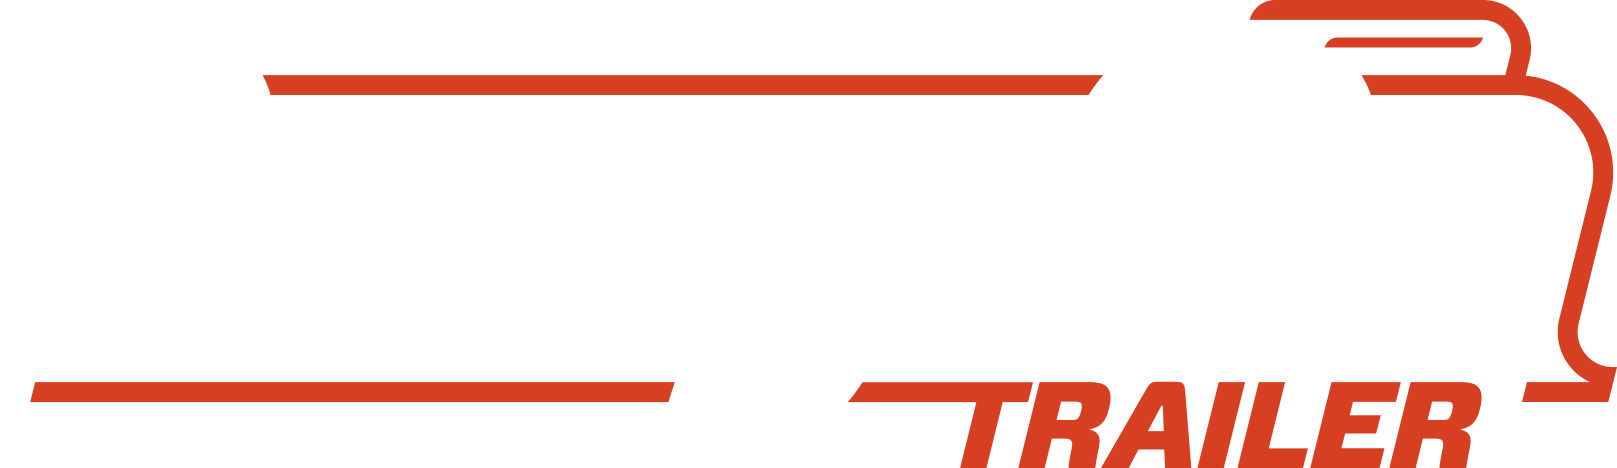 Carry-On Trailer logo